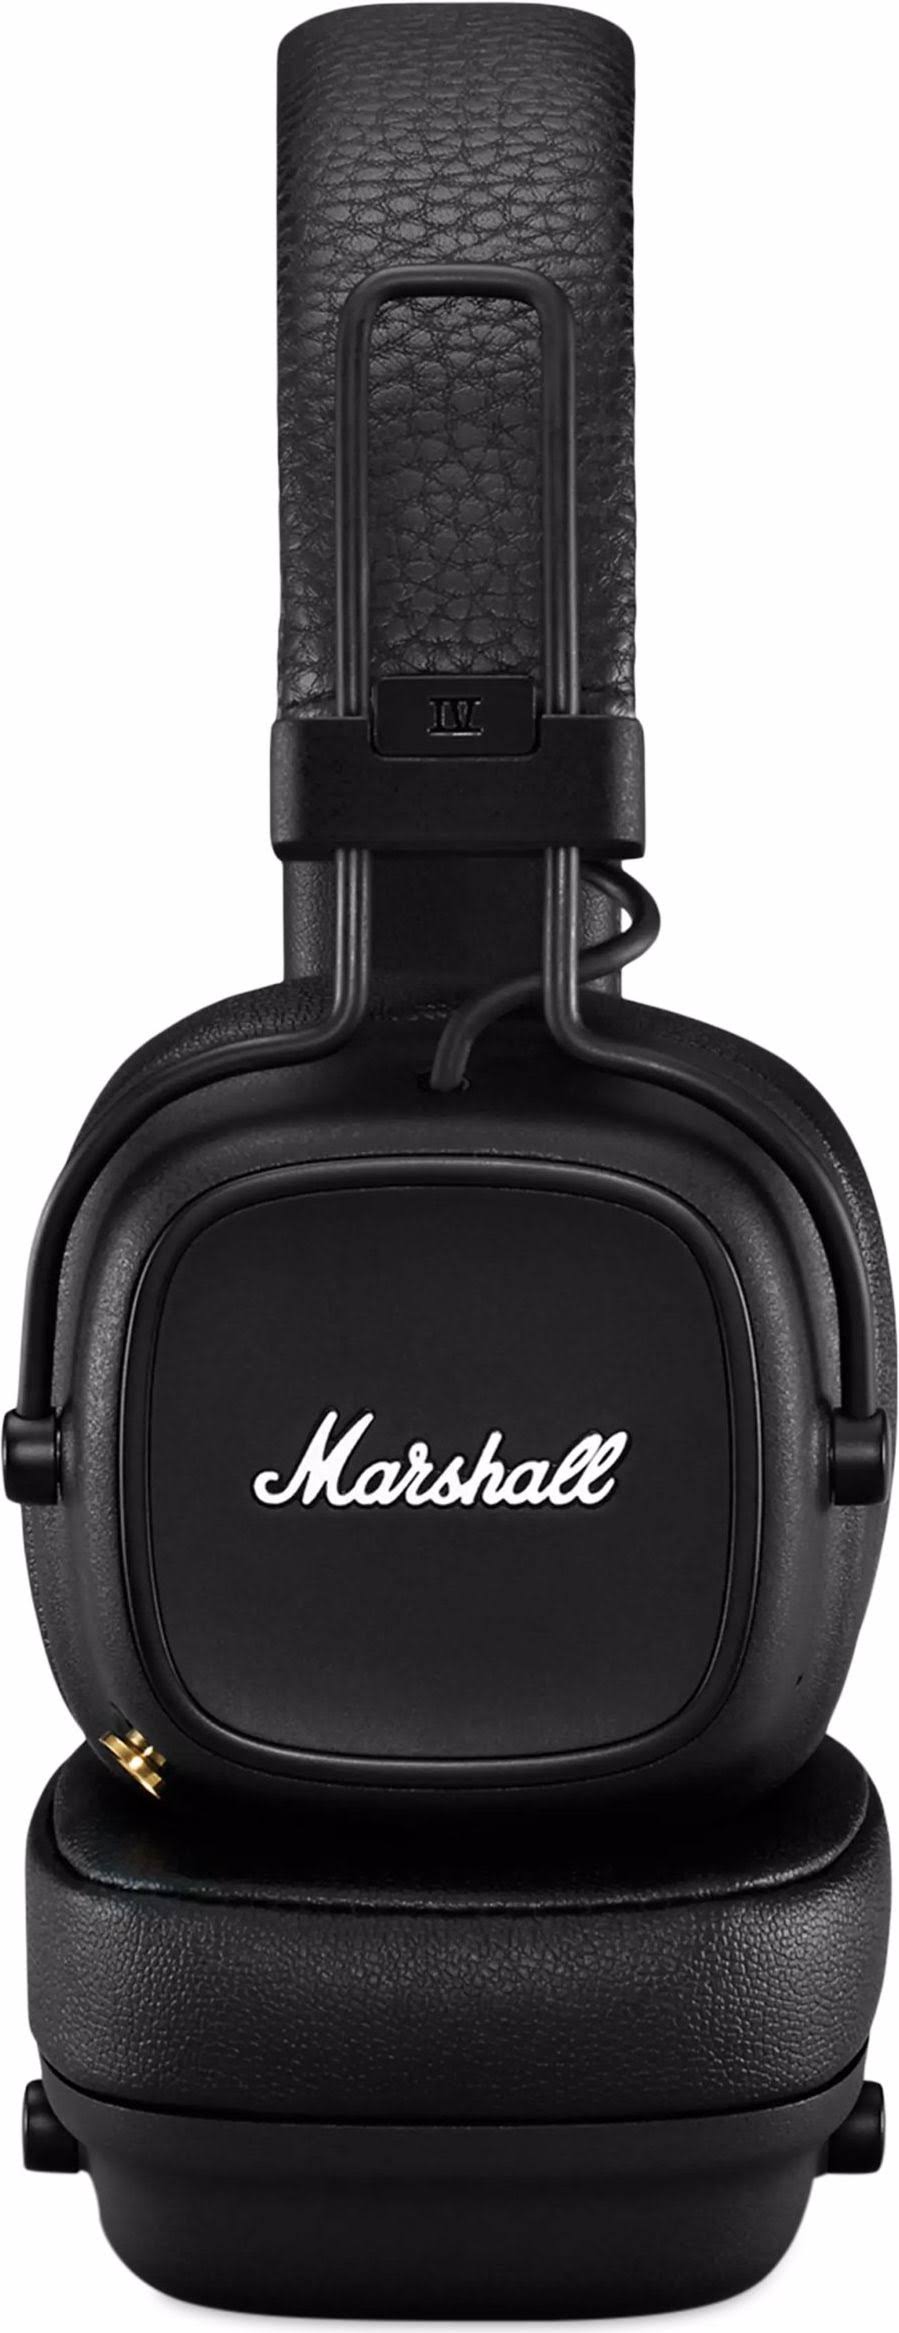 Marshall major iv over-ear auriculares bluetooth - negro MARSHALL